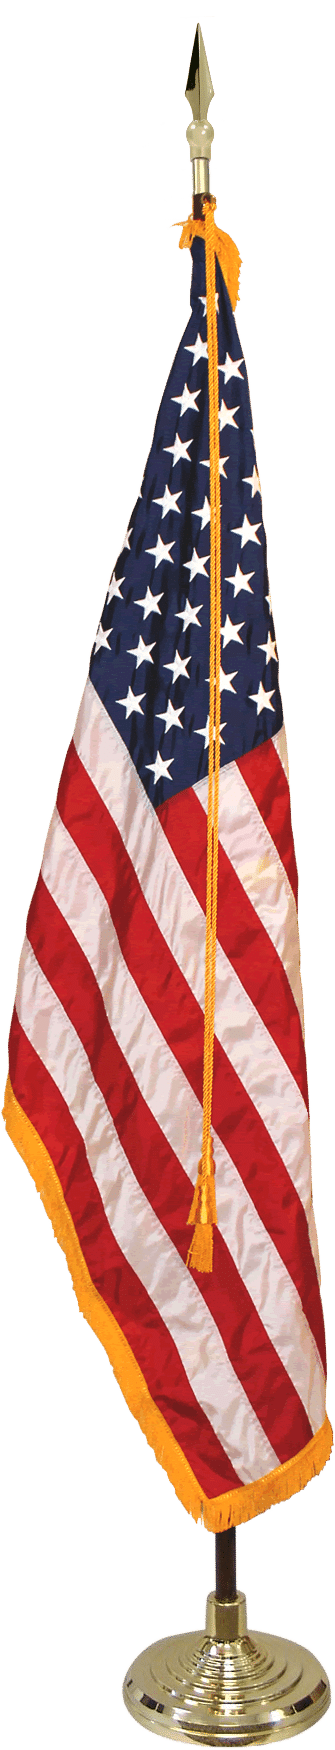 0937-american-flag